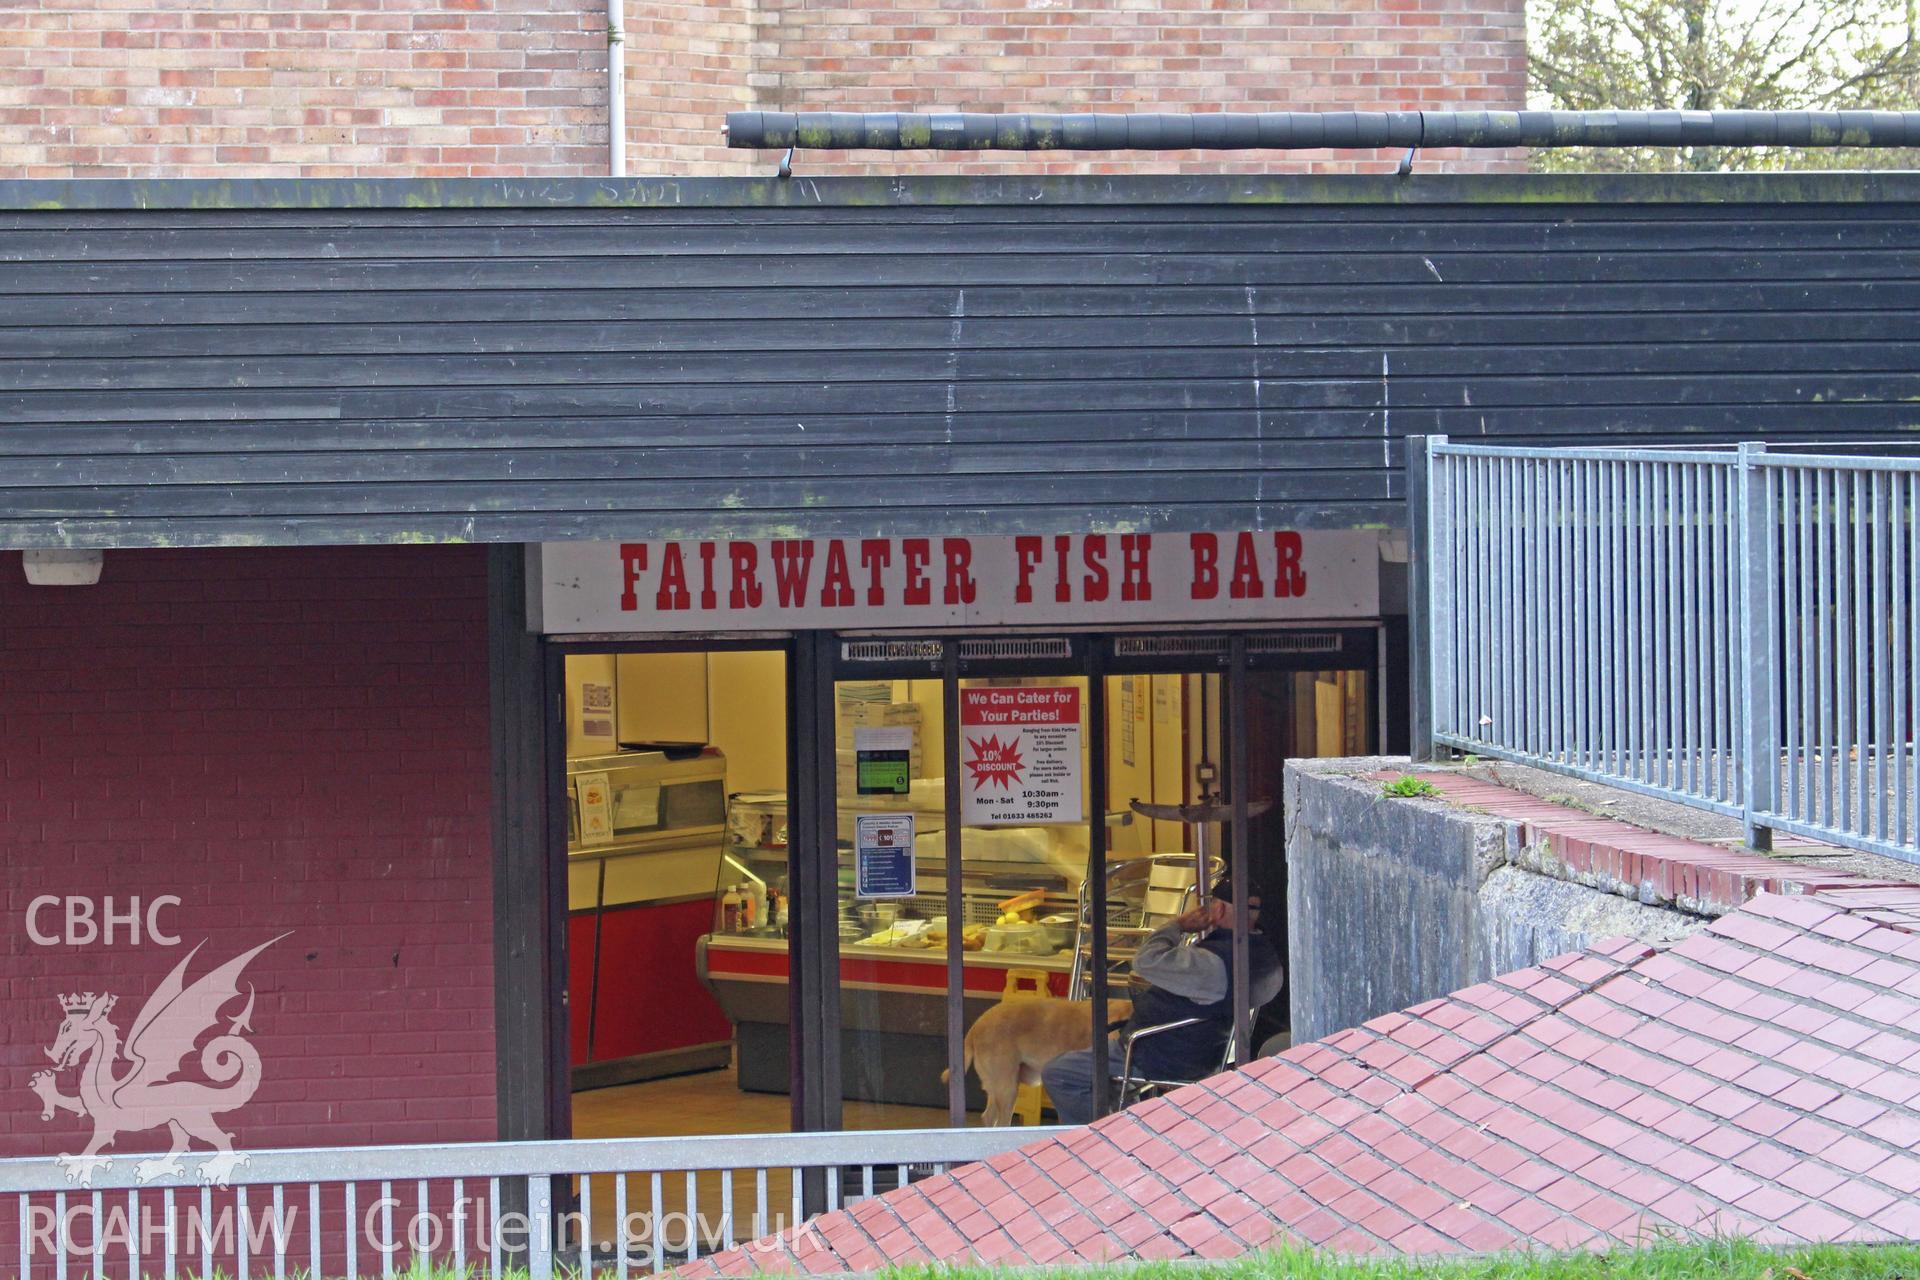 Fairwater Fish Bar shop front, Fairwater Square, Cwmbran. Photograph taken by Sue Fielding in November 2017.